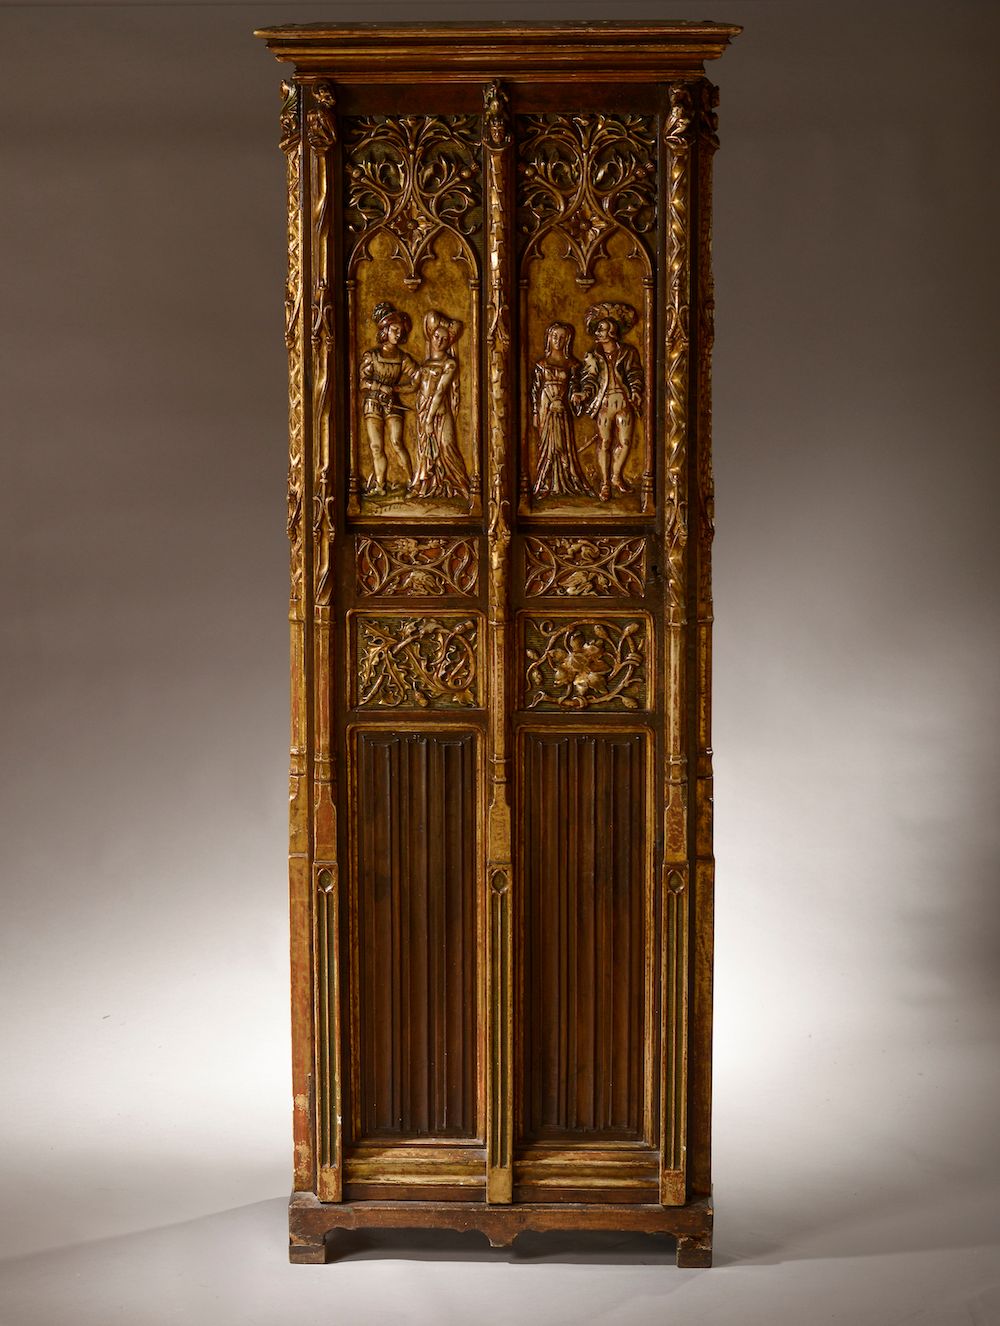 Null 单门柜，采用雕刻丰富、涂漆和镀金的木材，装饰着中世纪的英勇场景，与新哥特式的柱子交替出现。门的下半部分雕刻着餐巾纸的褶皱（轻微磨损）。

19世纪，采&hellip;